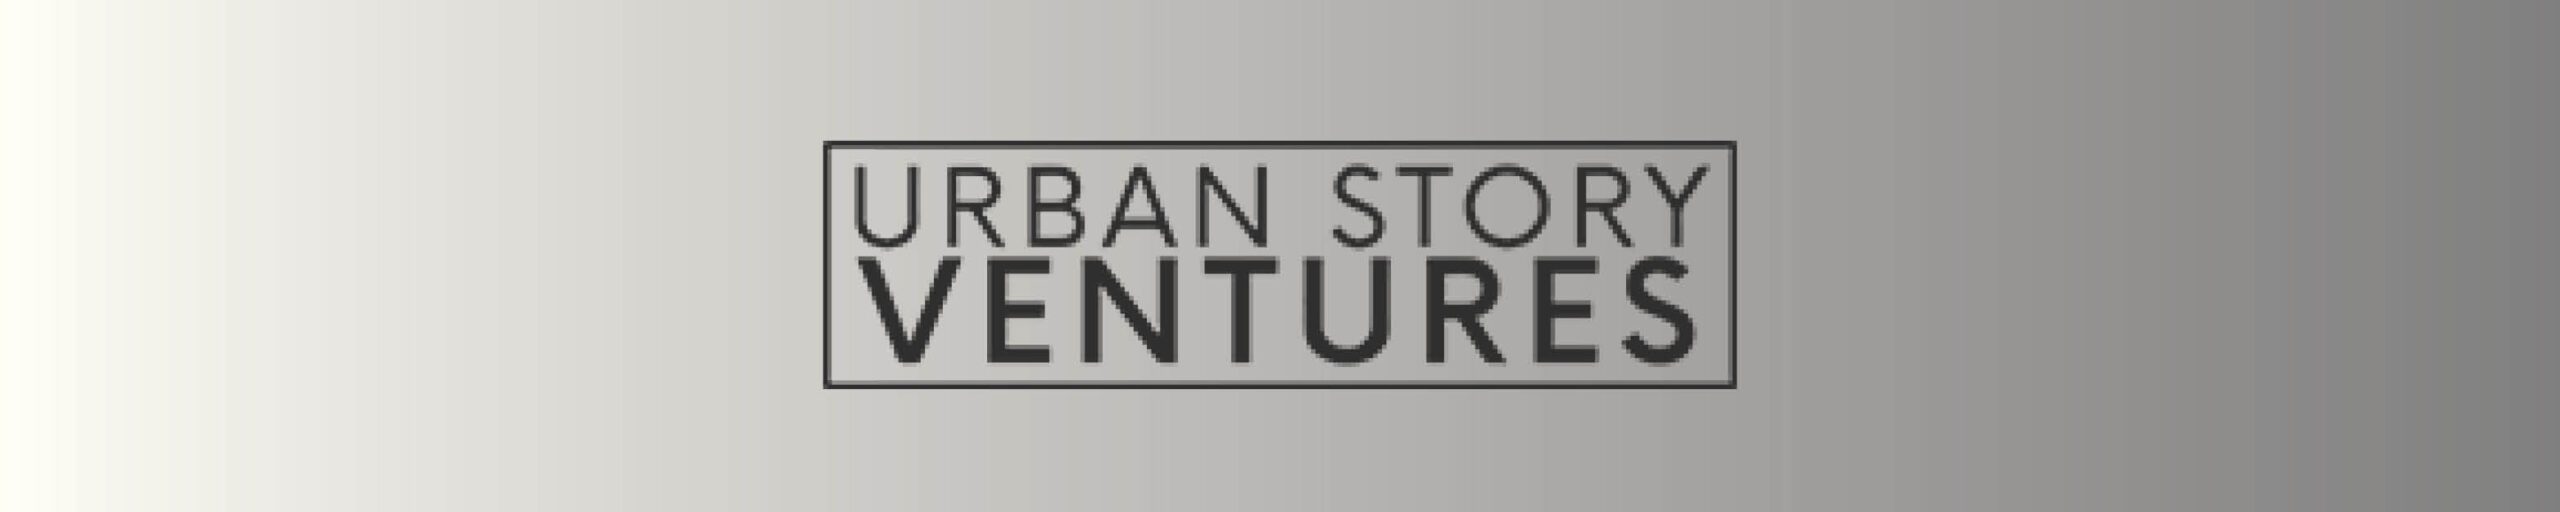 Urban Story Ventures ad